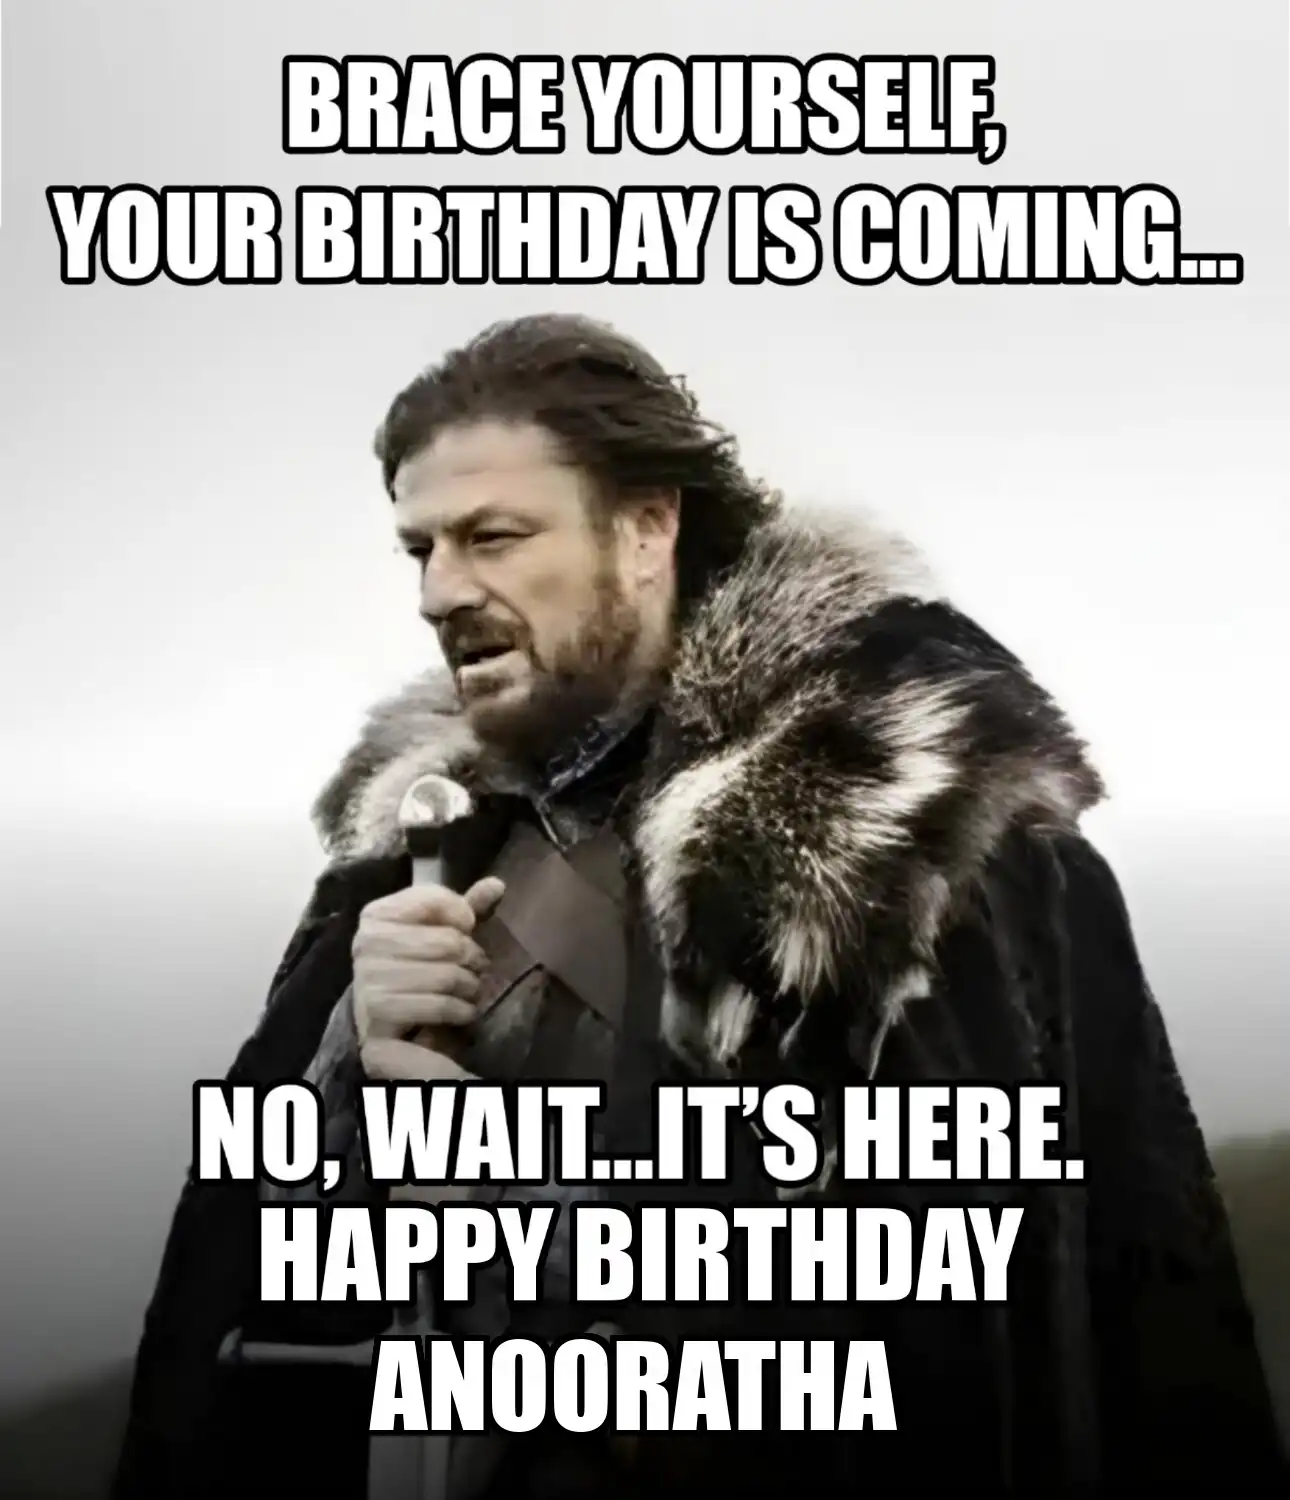 Happy Birthday Anooratha Brace Yourself Your Birthday Is Coming Meme